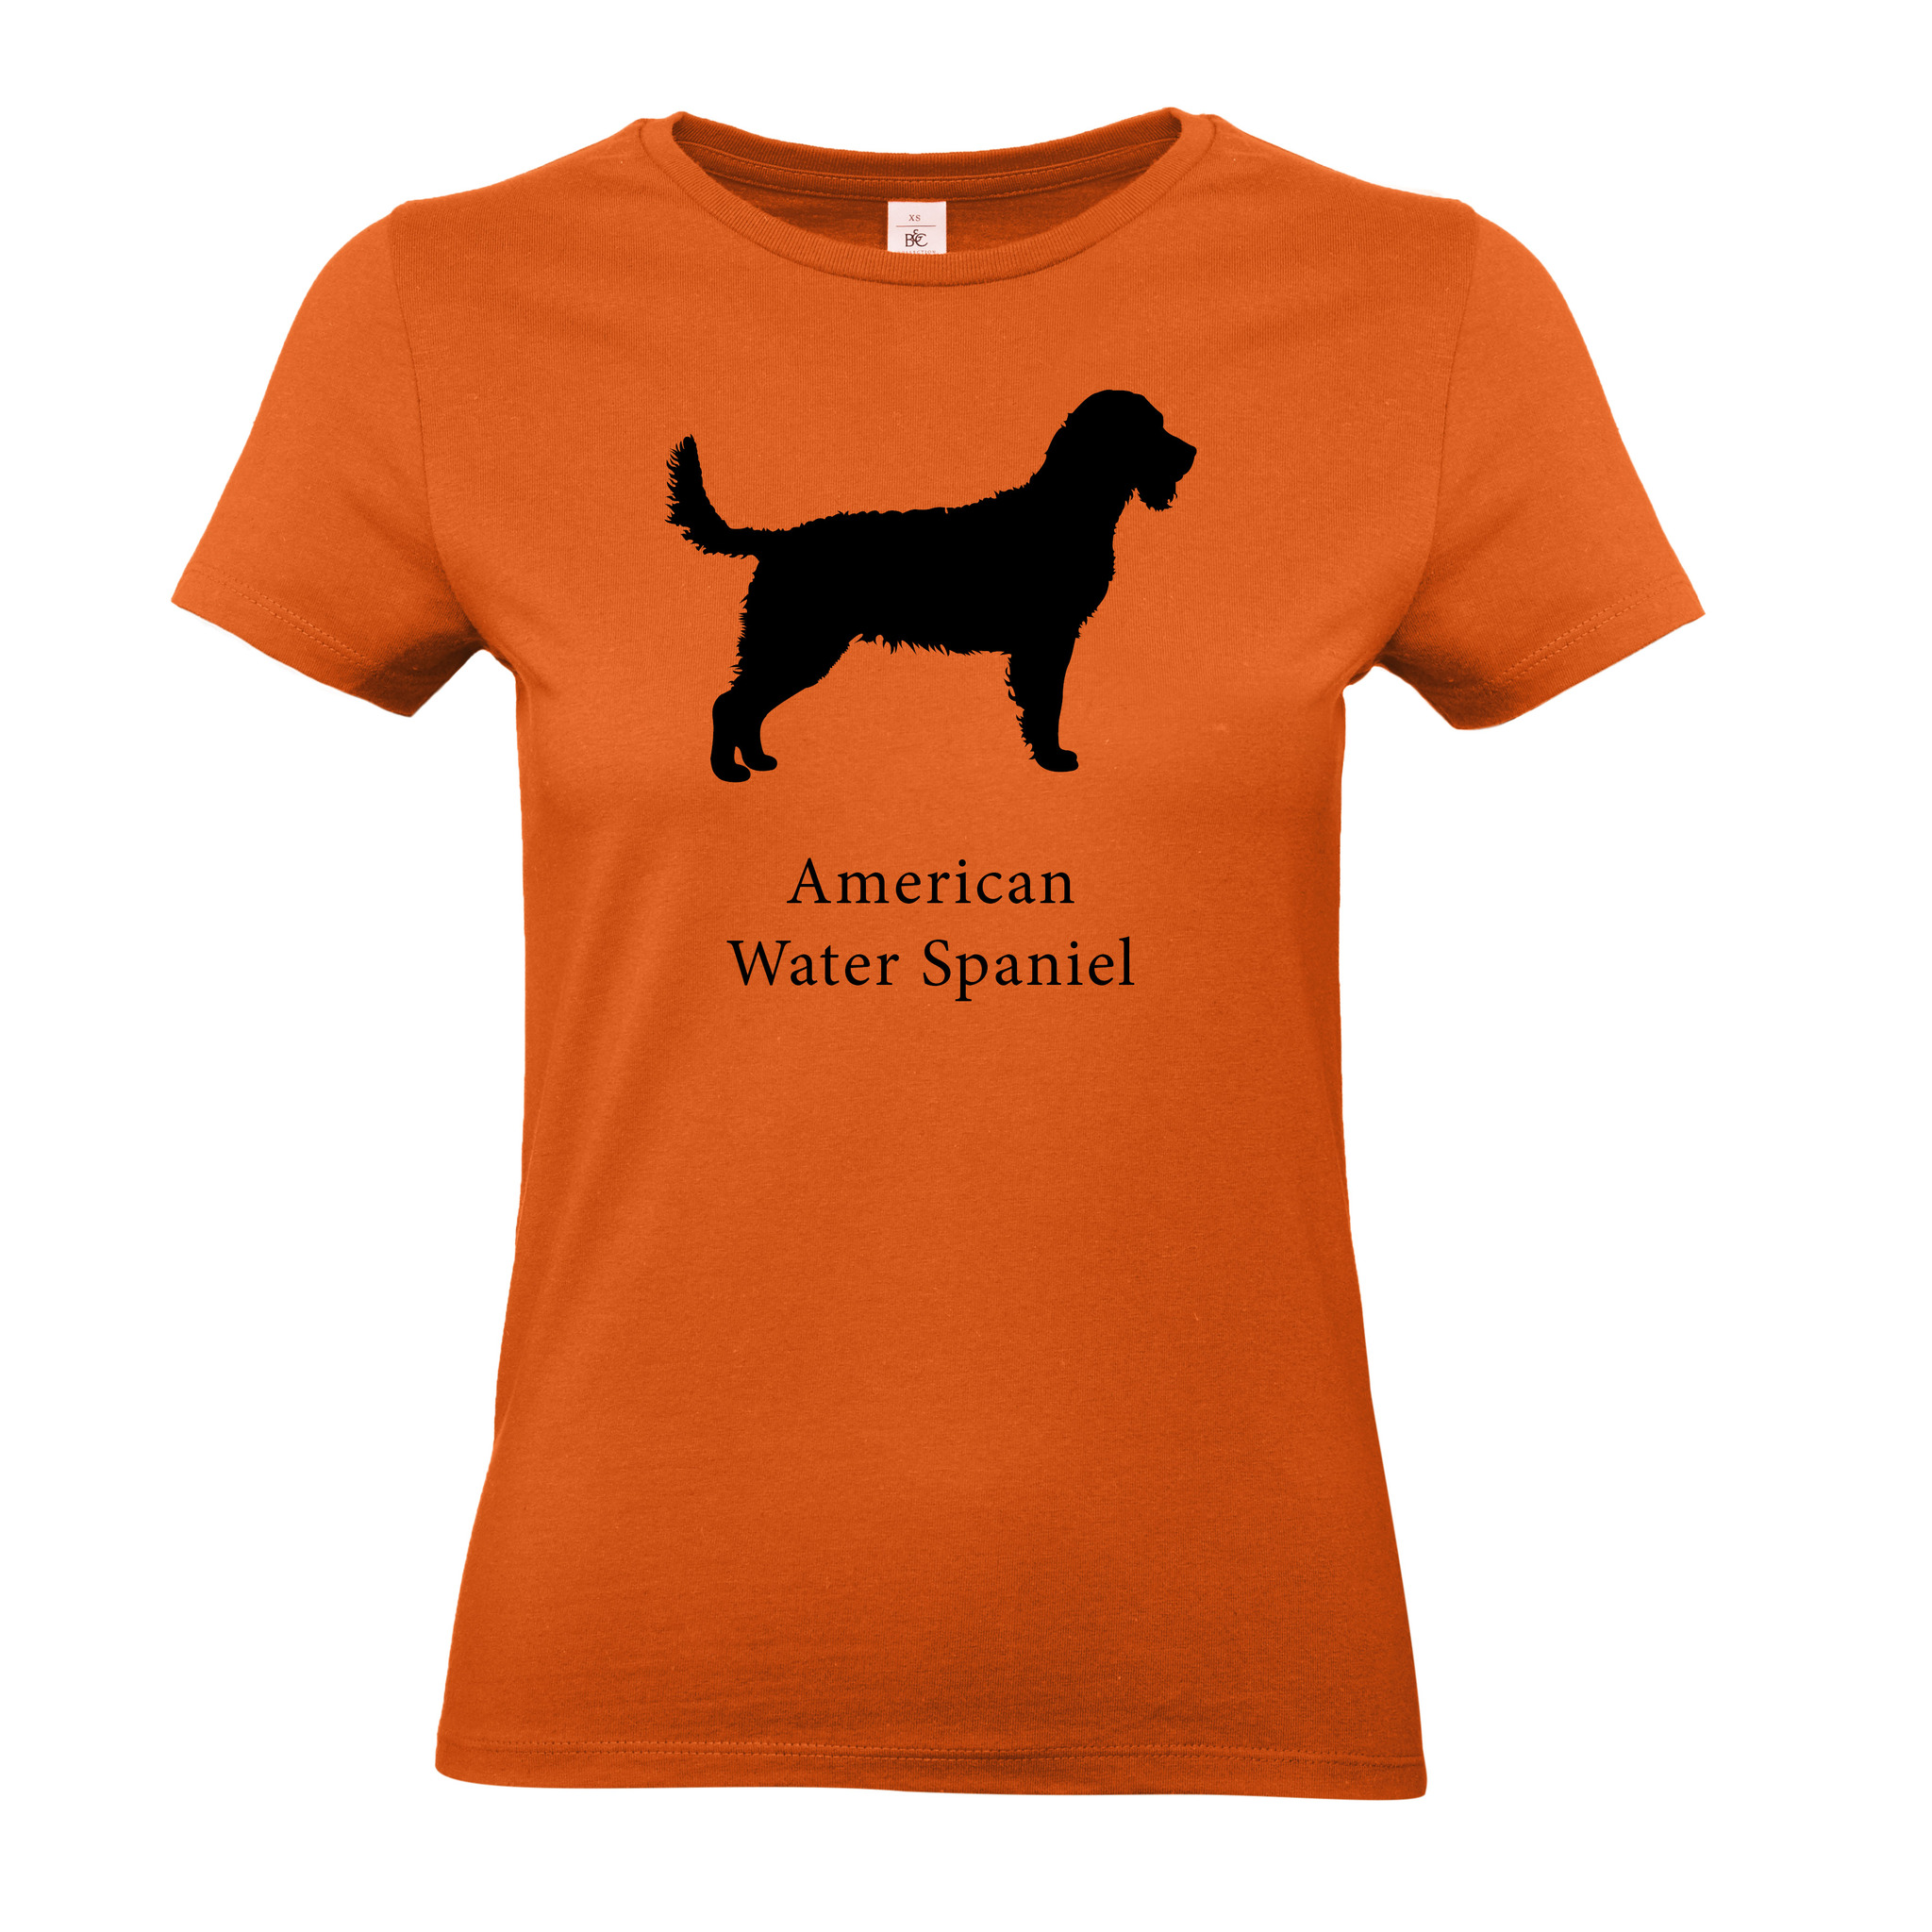 T-shirt, Hundraser - Urban Orange